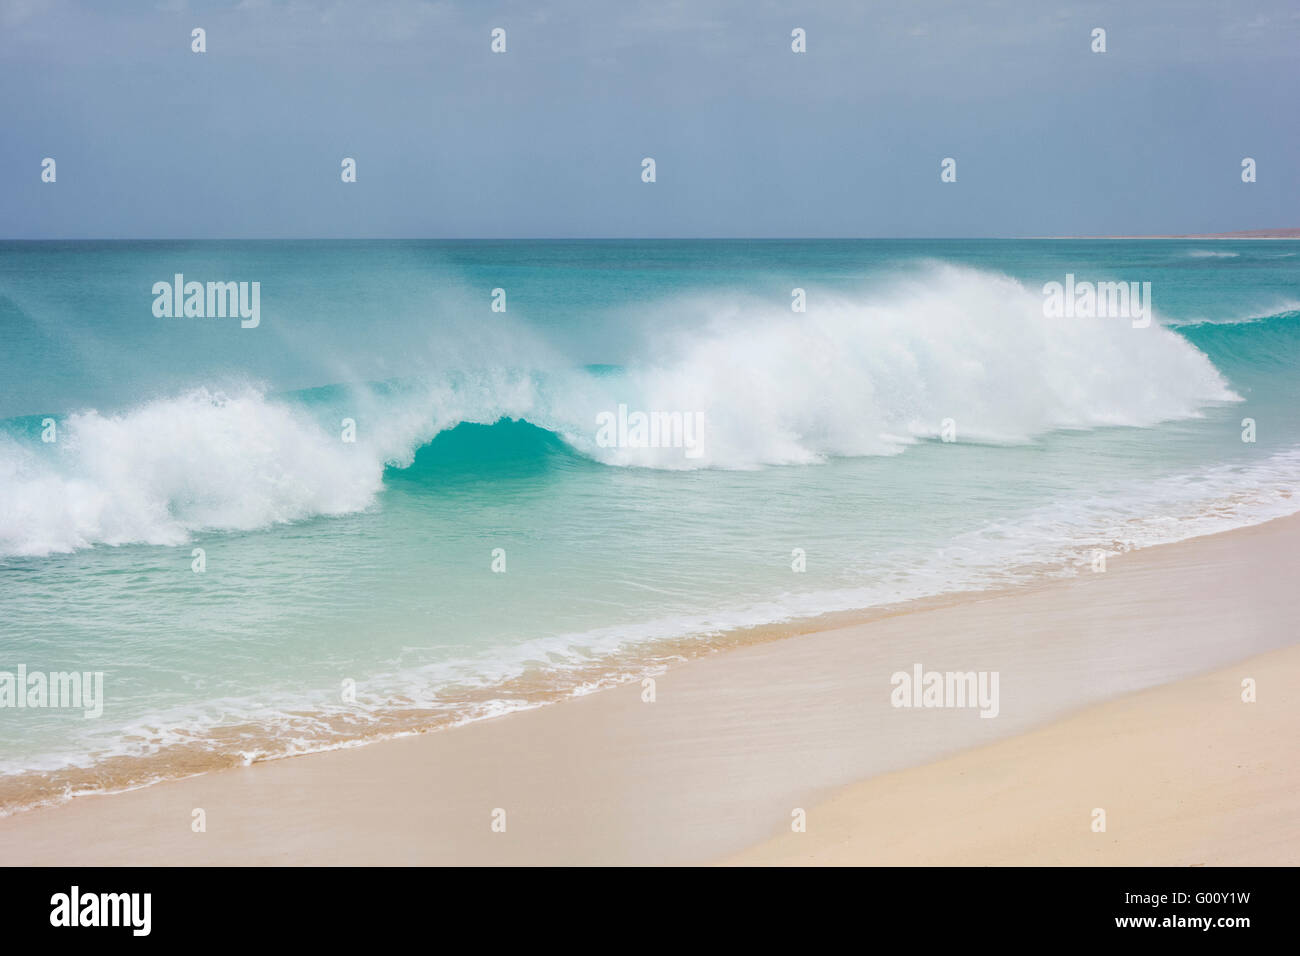 Big waves, near Curral Velho, Boa Vista, Cape Verde Stock Photo